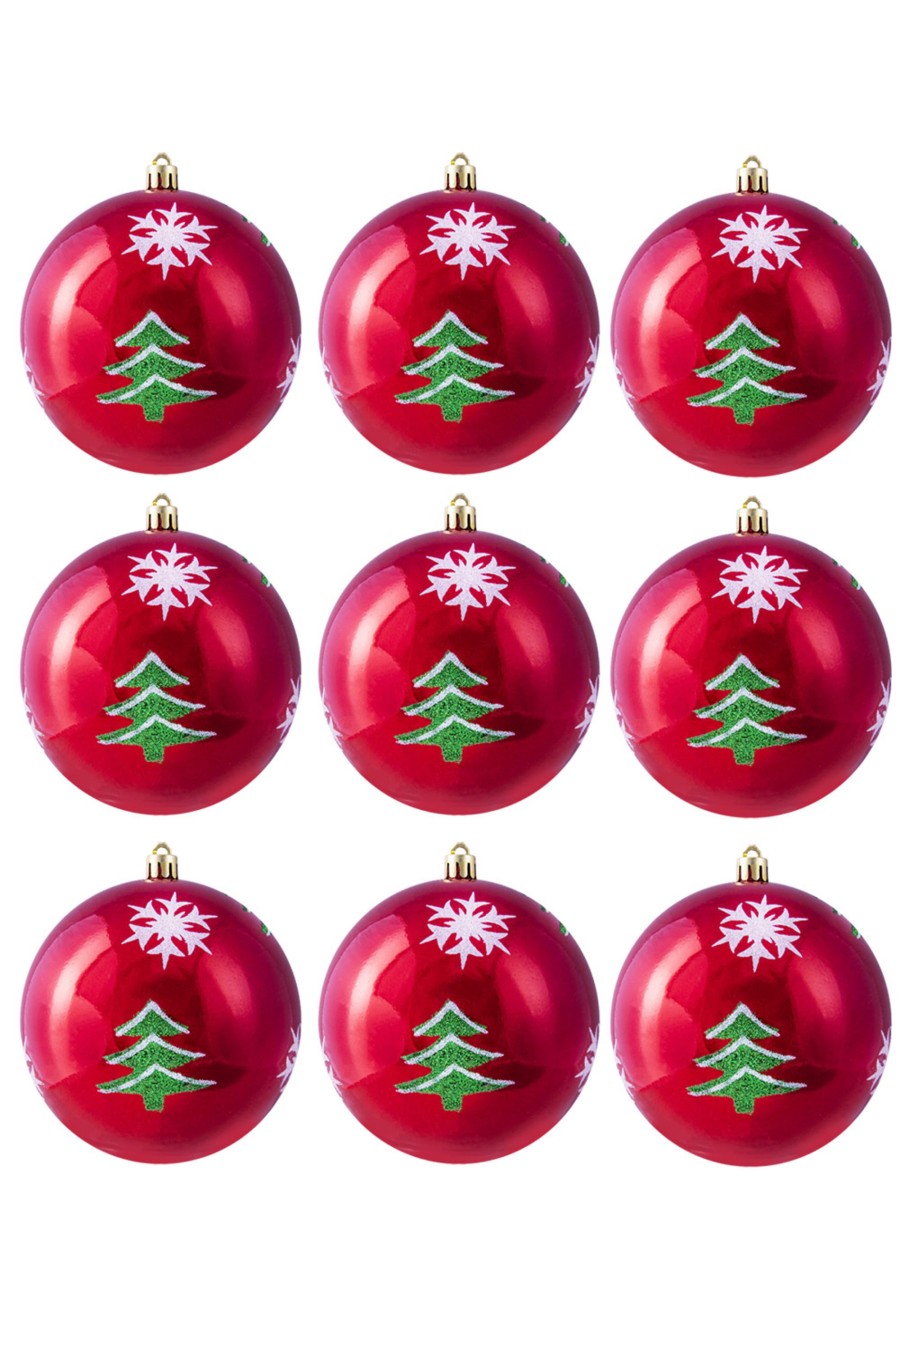 Medium Christmas Baubles | Christmas Tree World Medium Christmas ...